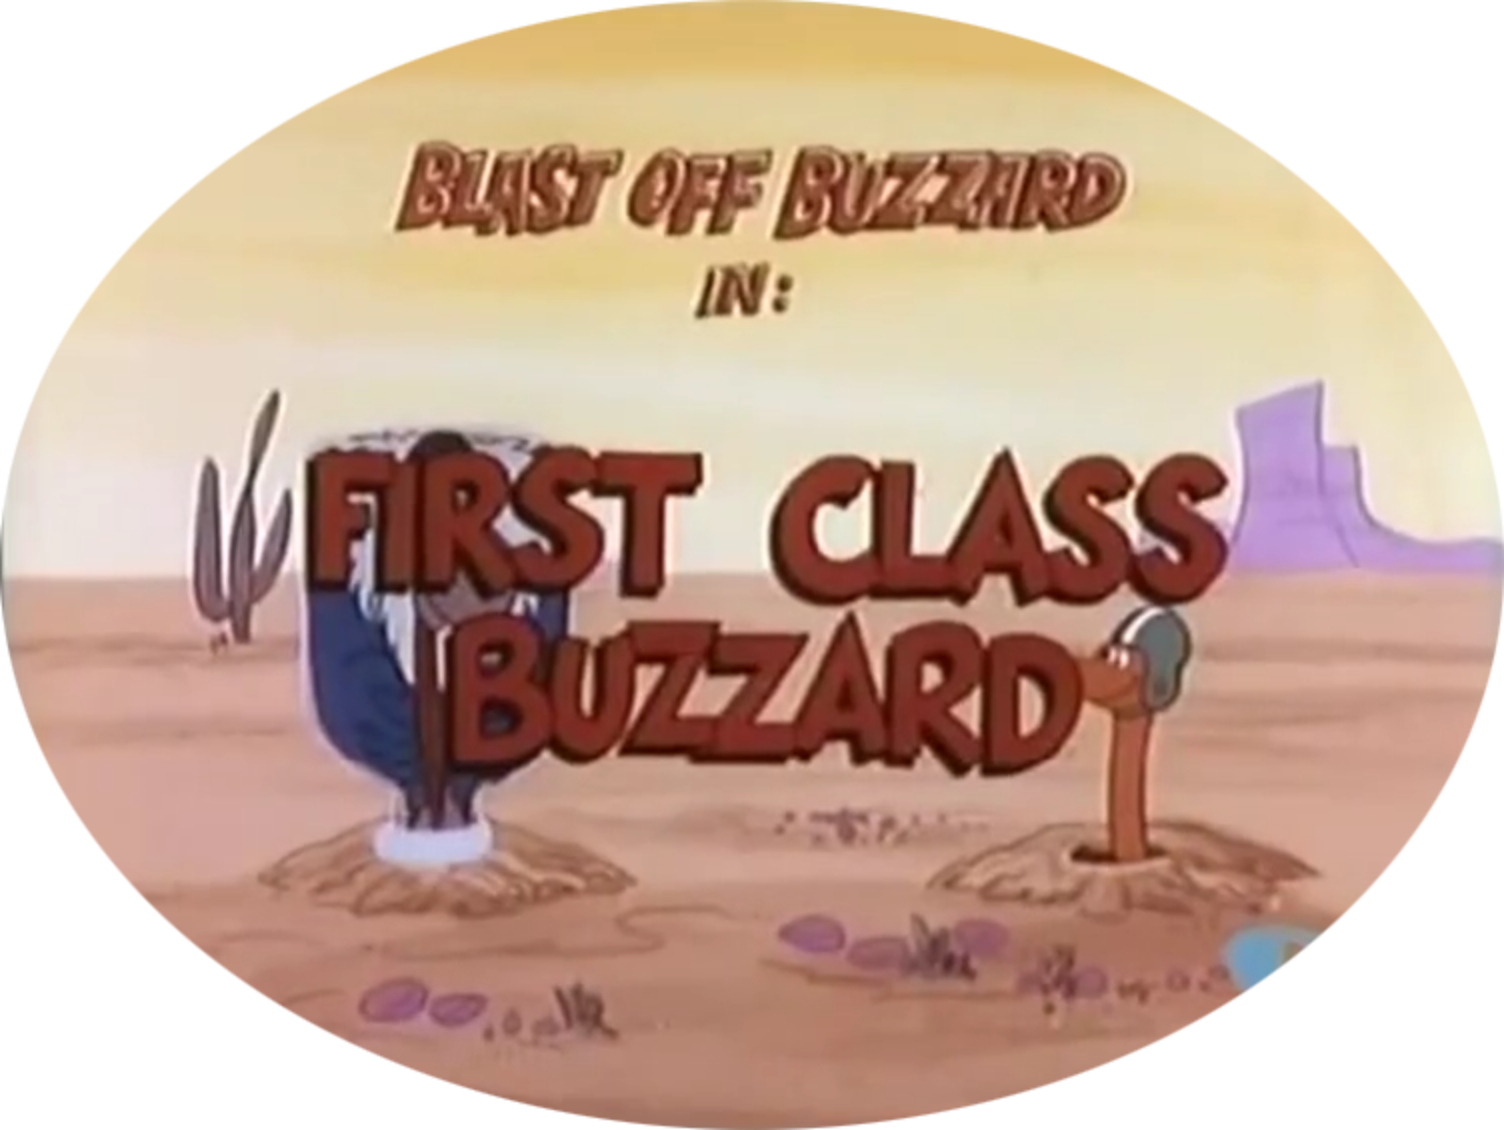 Blast-Off Buzzard